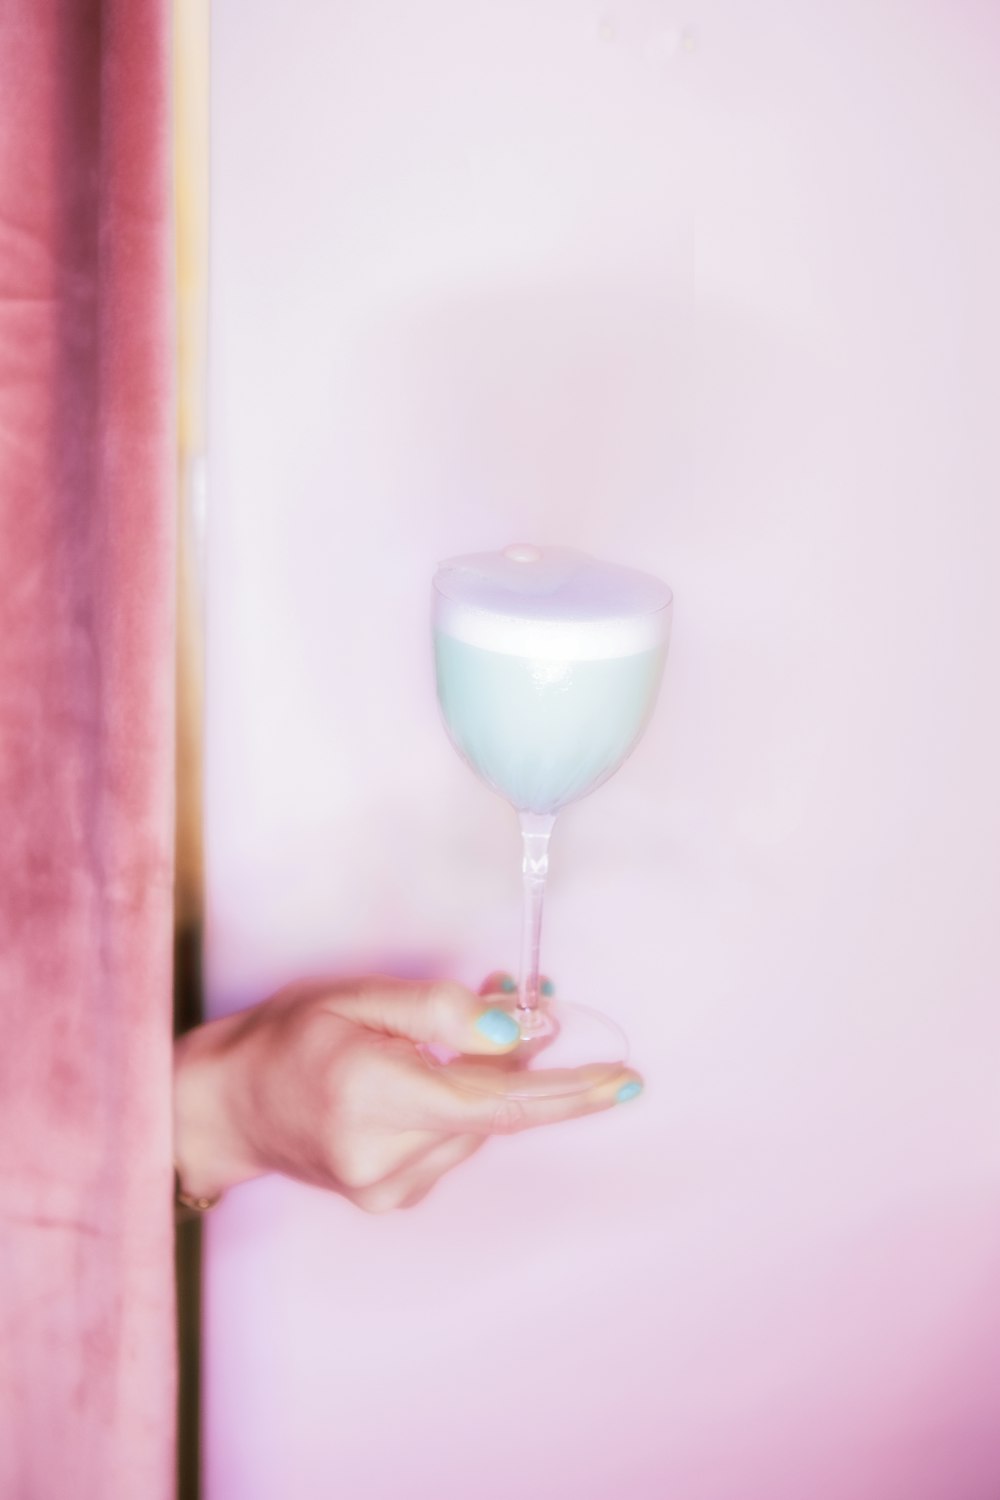 a hand holding a glass of blue liquid